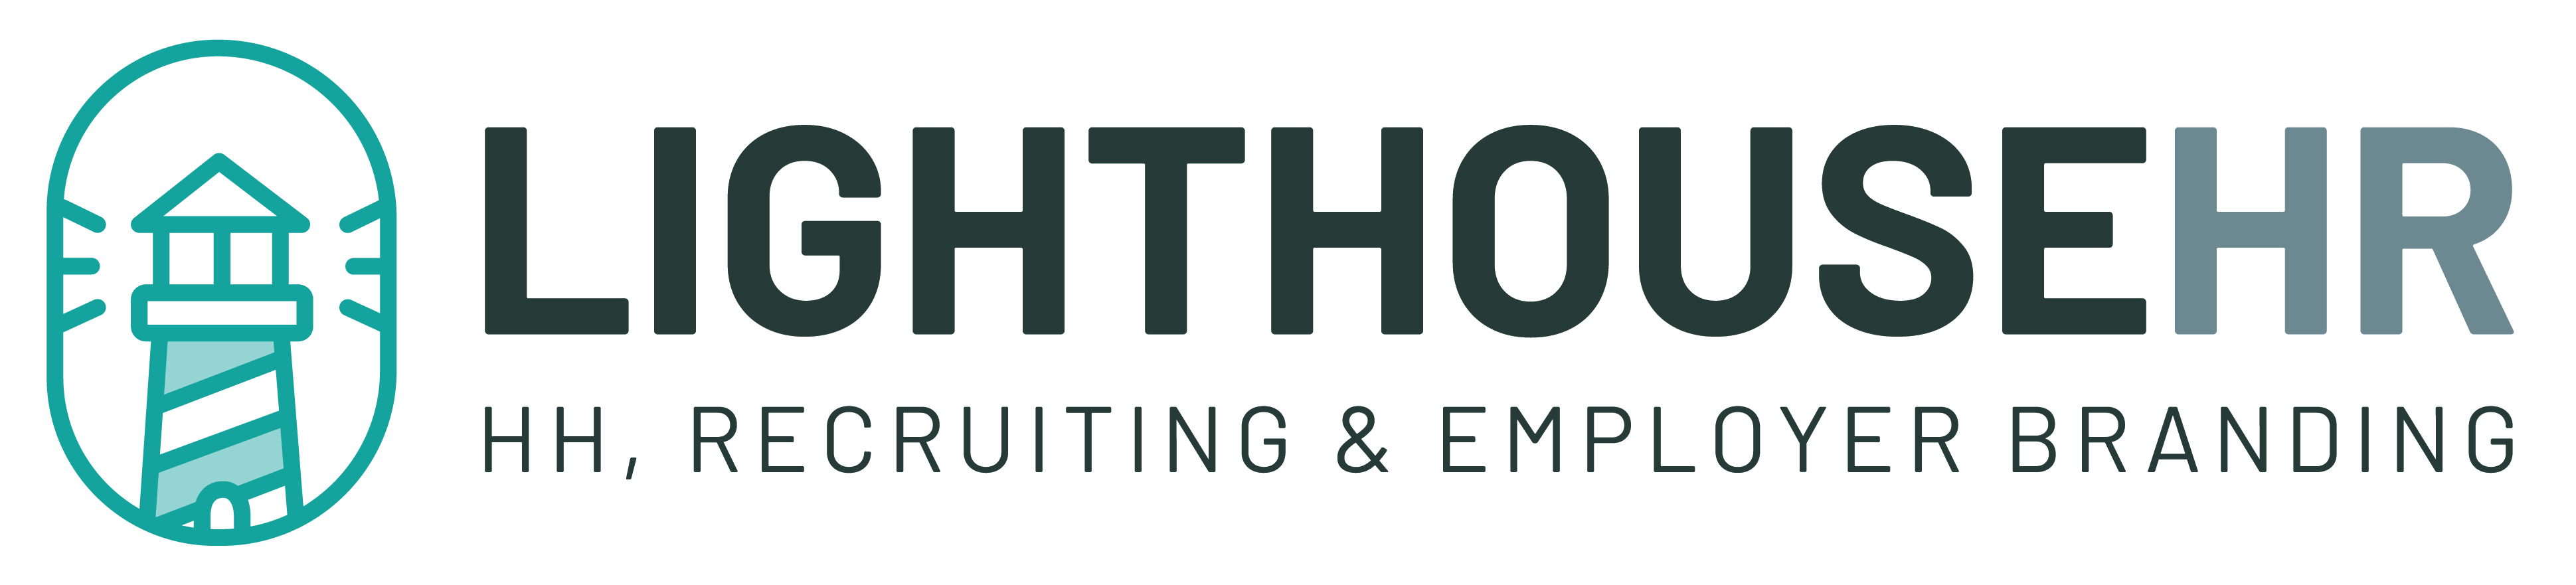 Logo LIGHTHOUSE HR